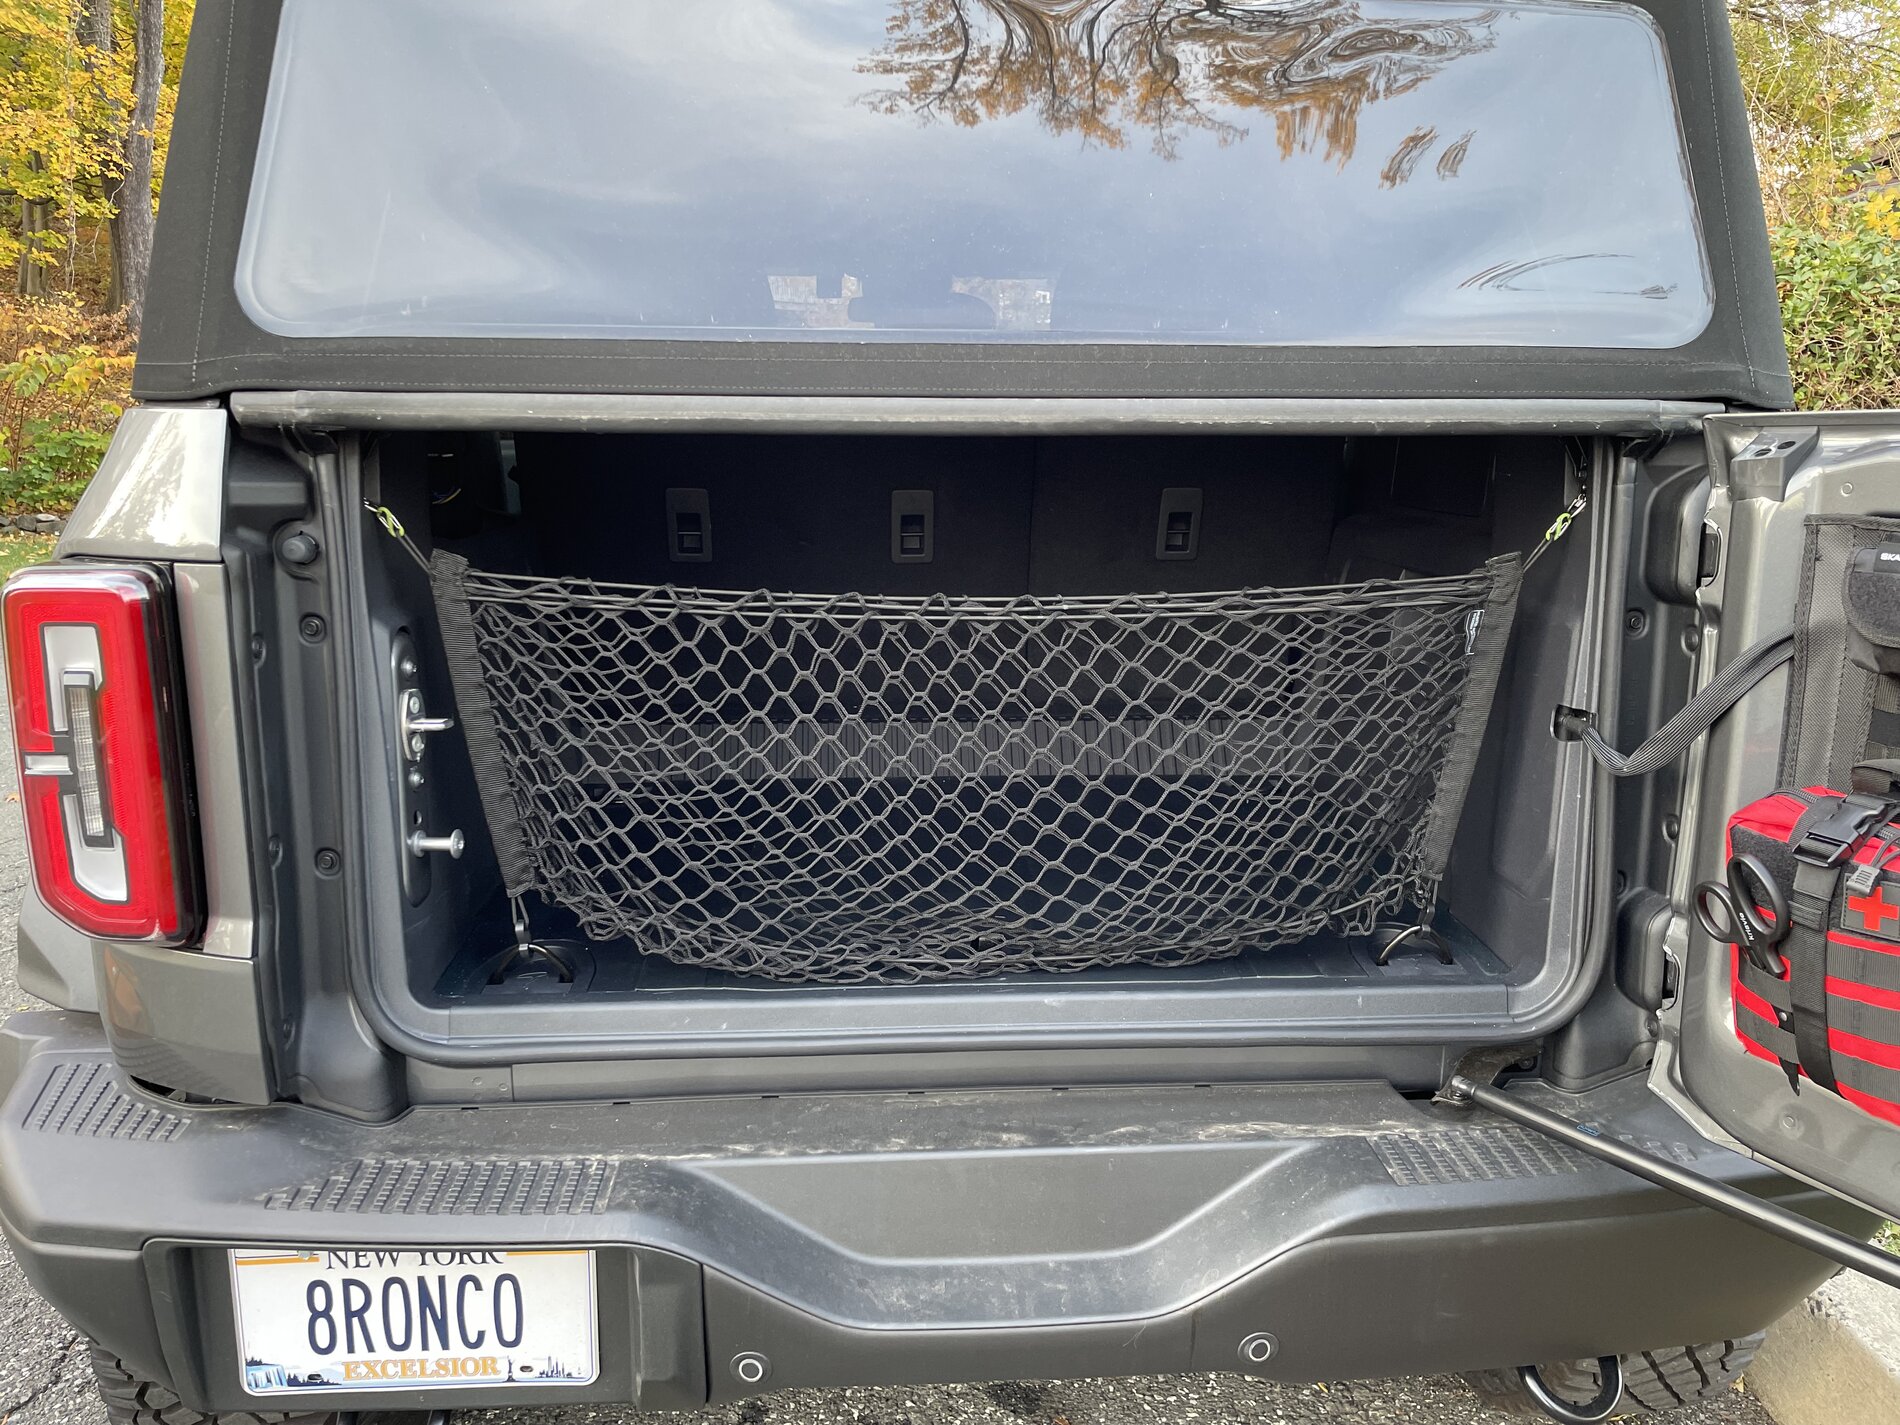 Ford Bronco Rear cargo net - Vertical orientation C2EA0366-022B-4B48-A1F0-A01F9074E75A